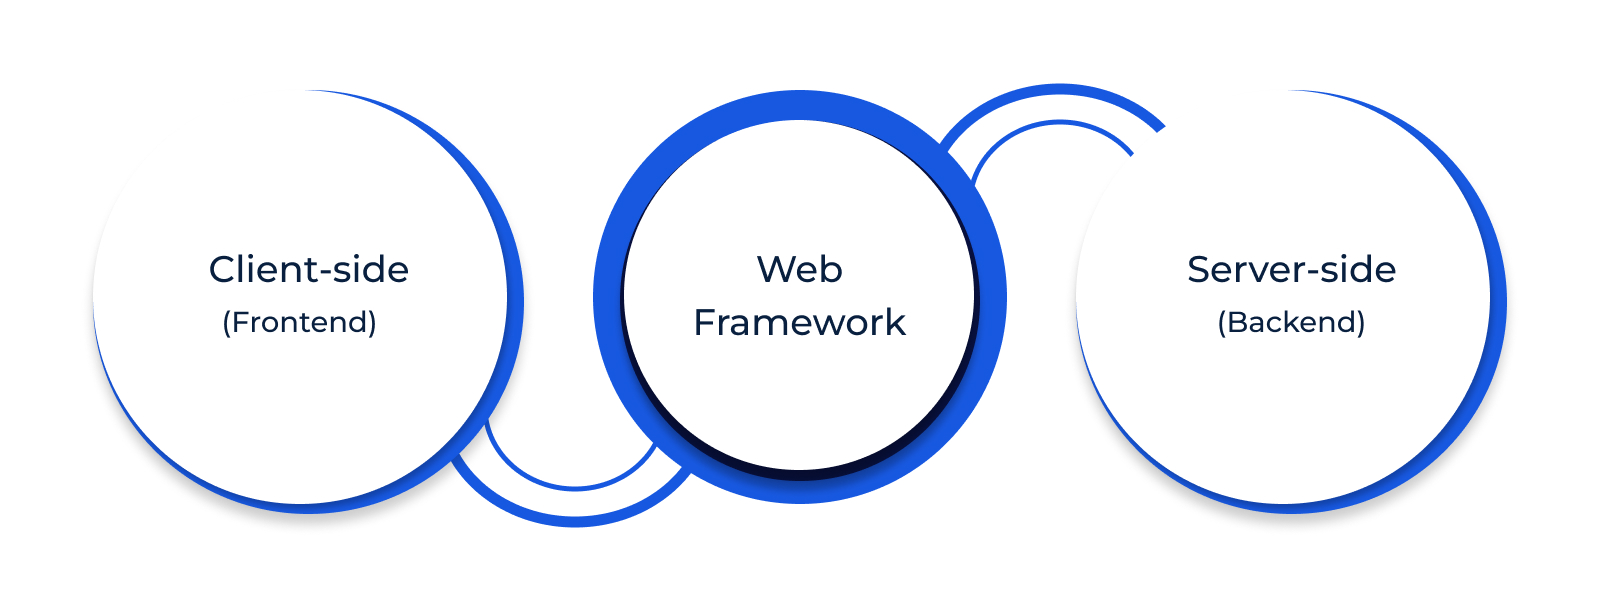 web-framework-categories